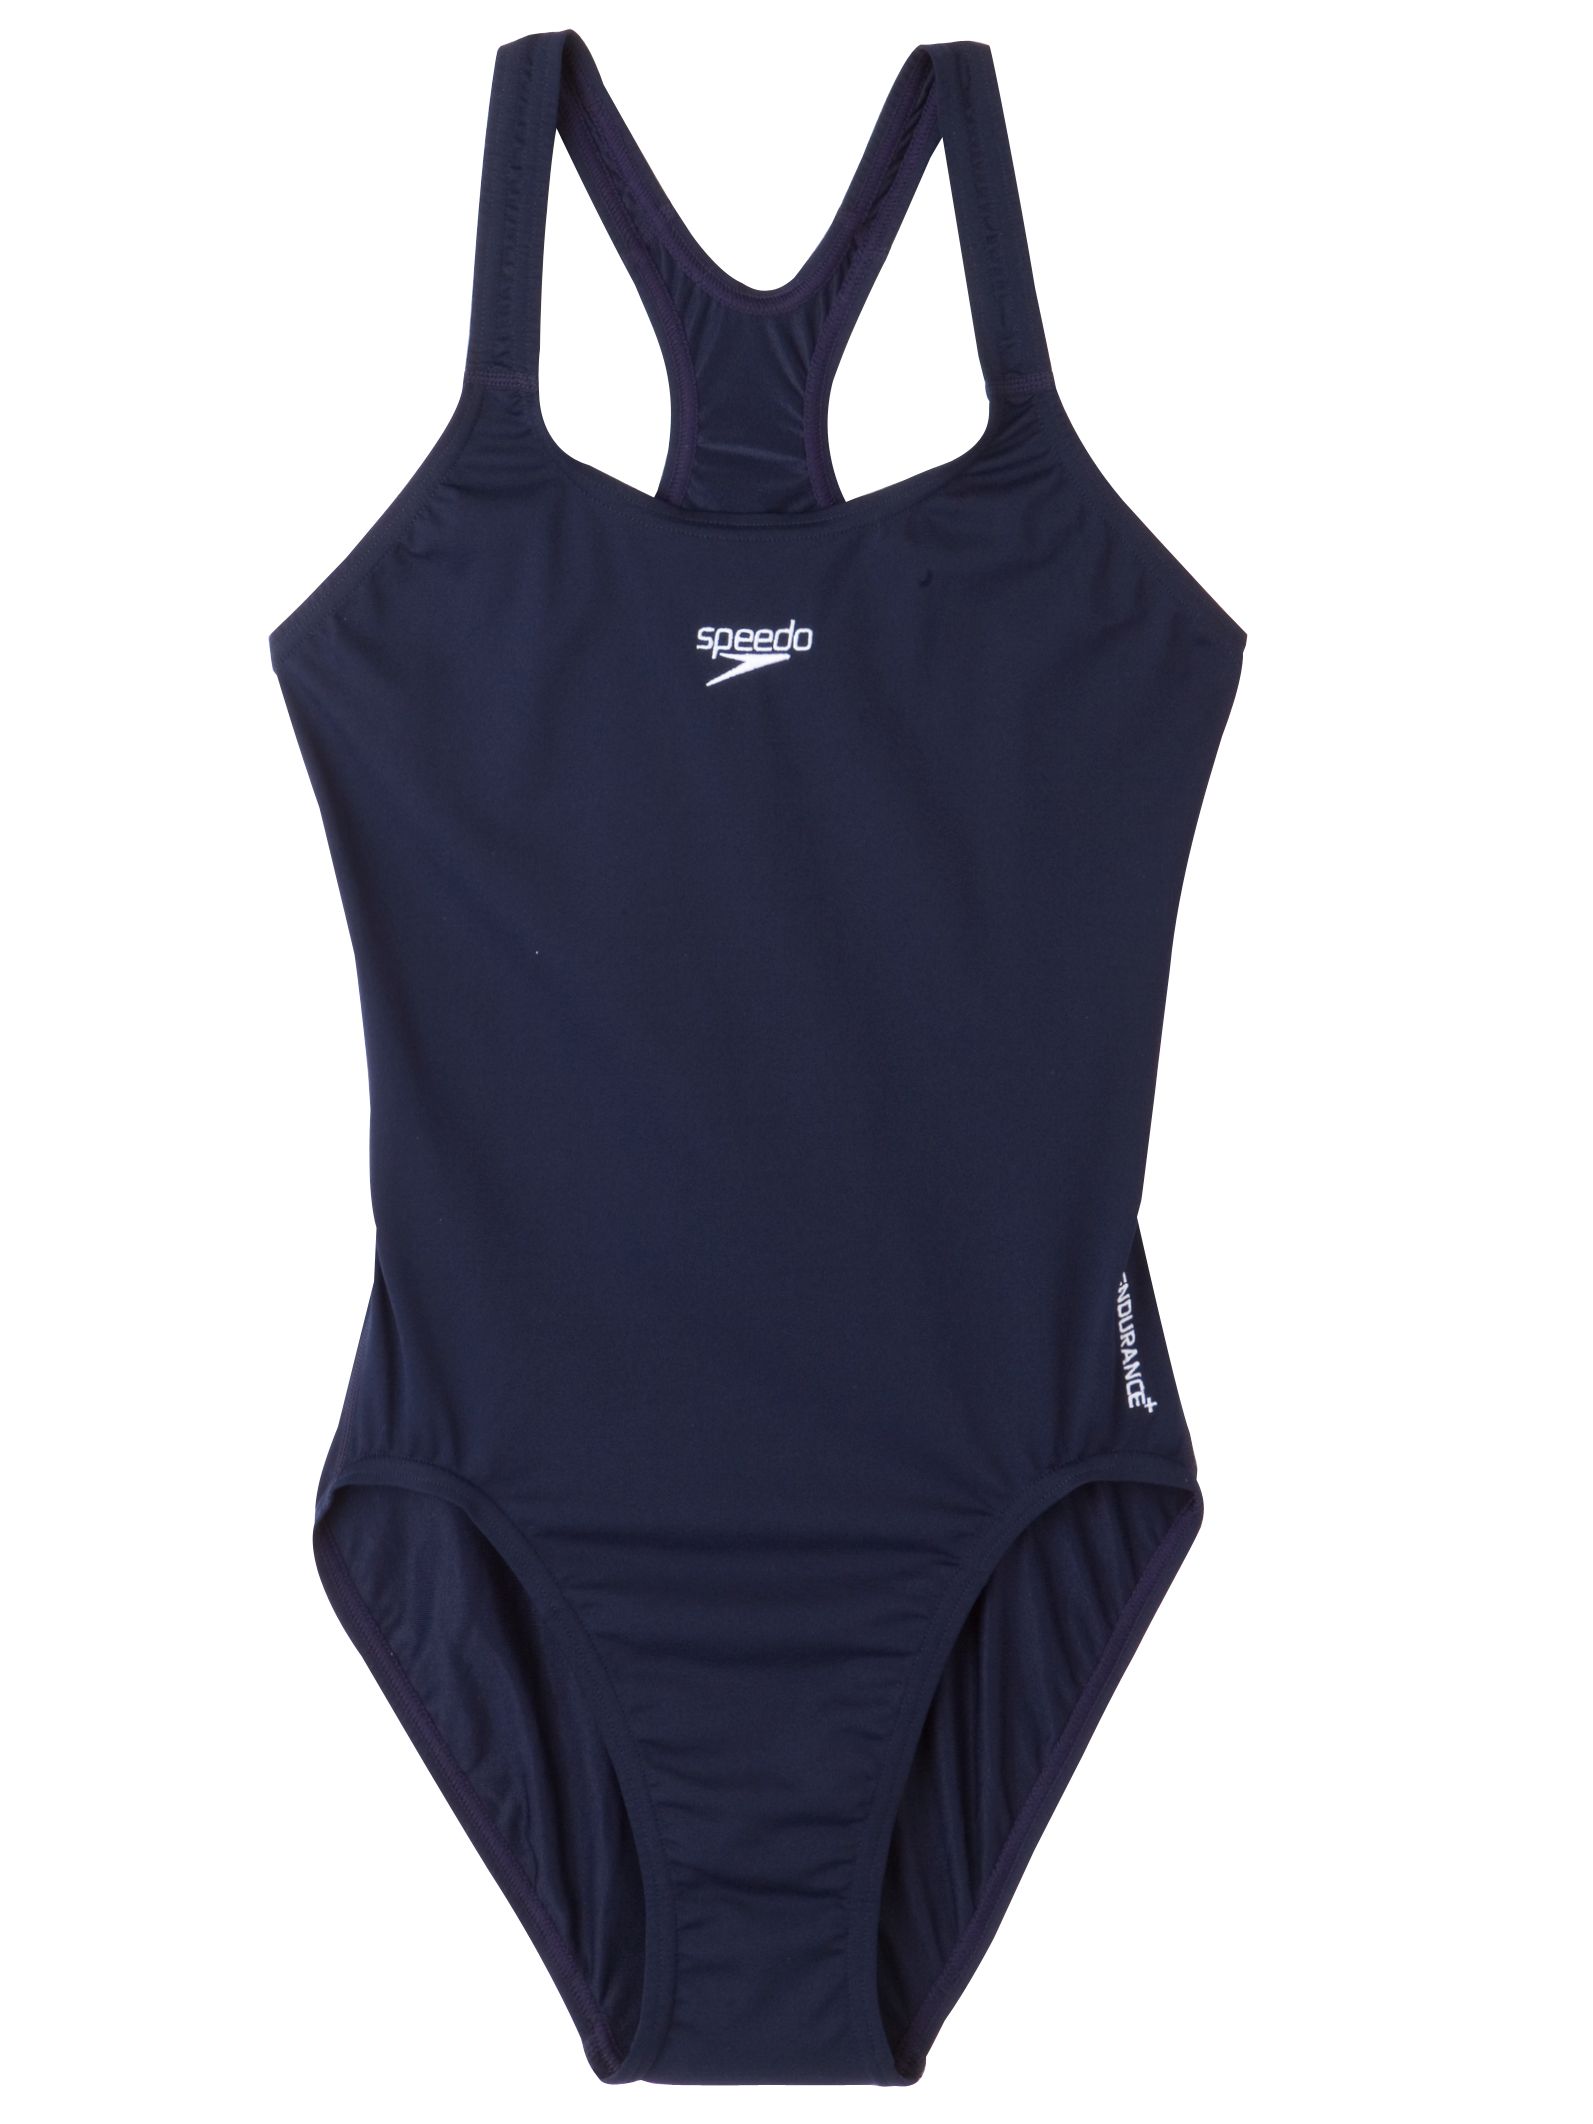 Speedo Endurance  Medalist Swimsuit, Navy, Size 32